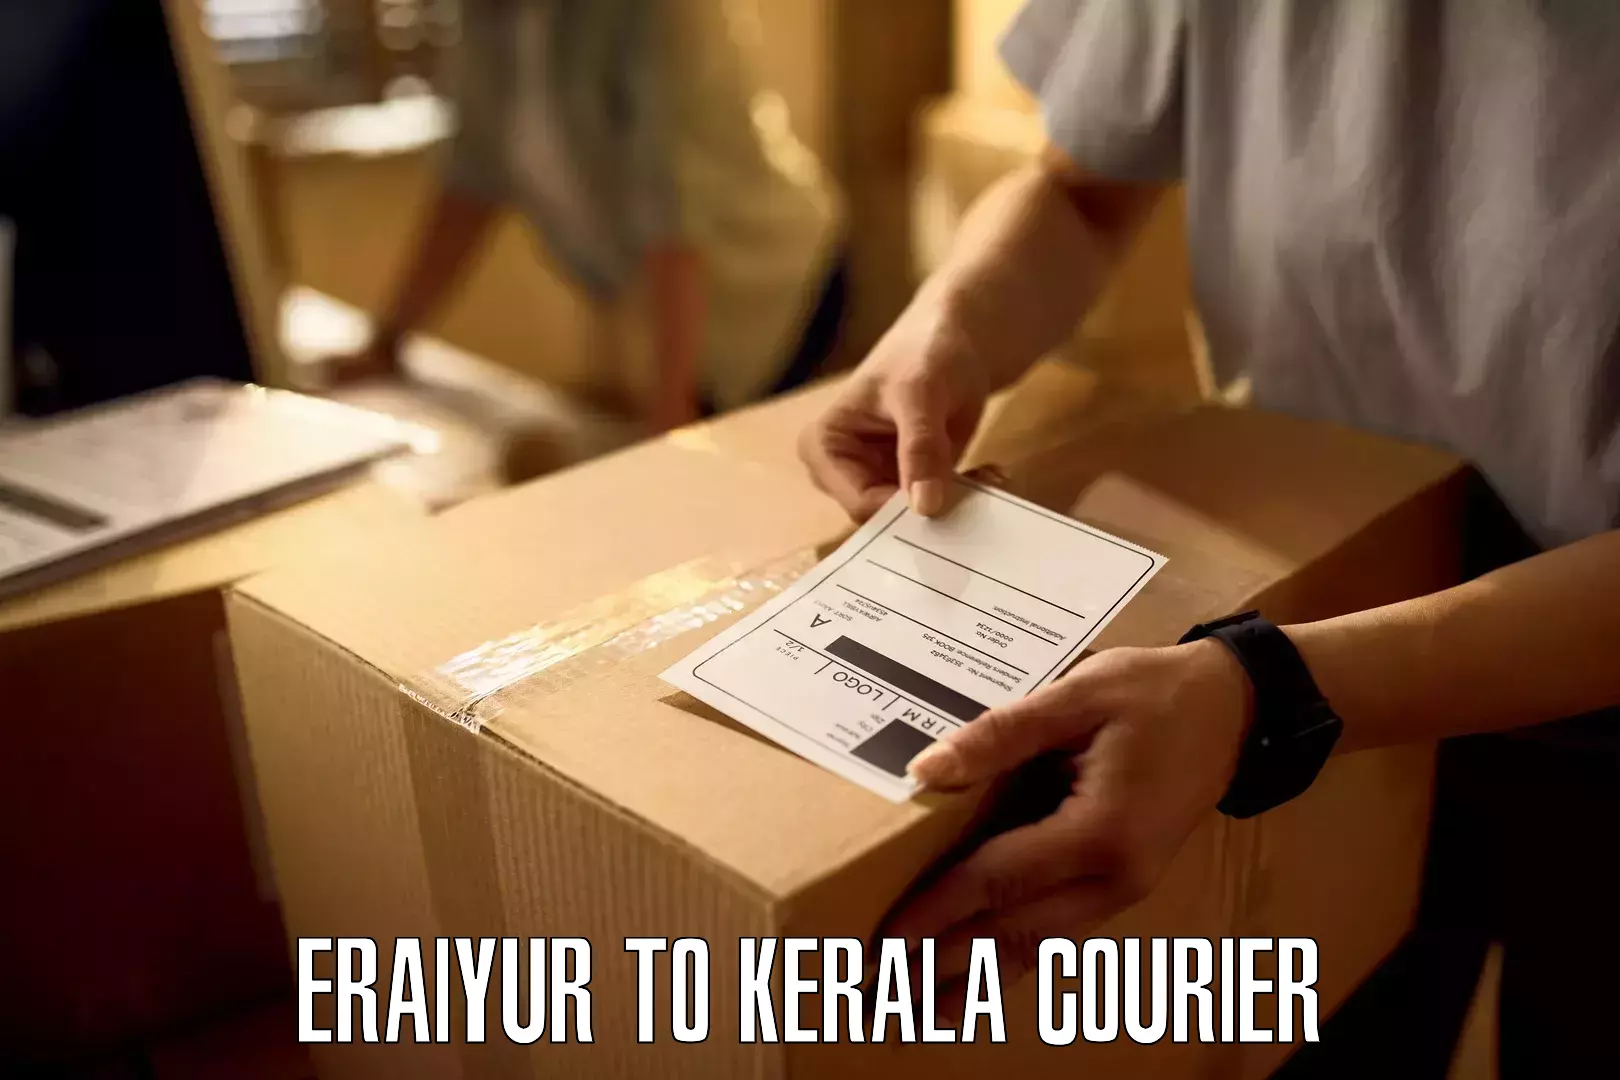 Nationwide delivery network Eraiyur to Kottayam